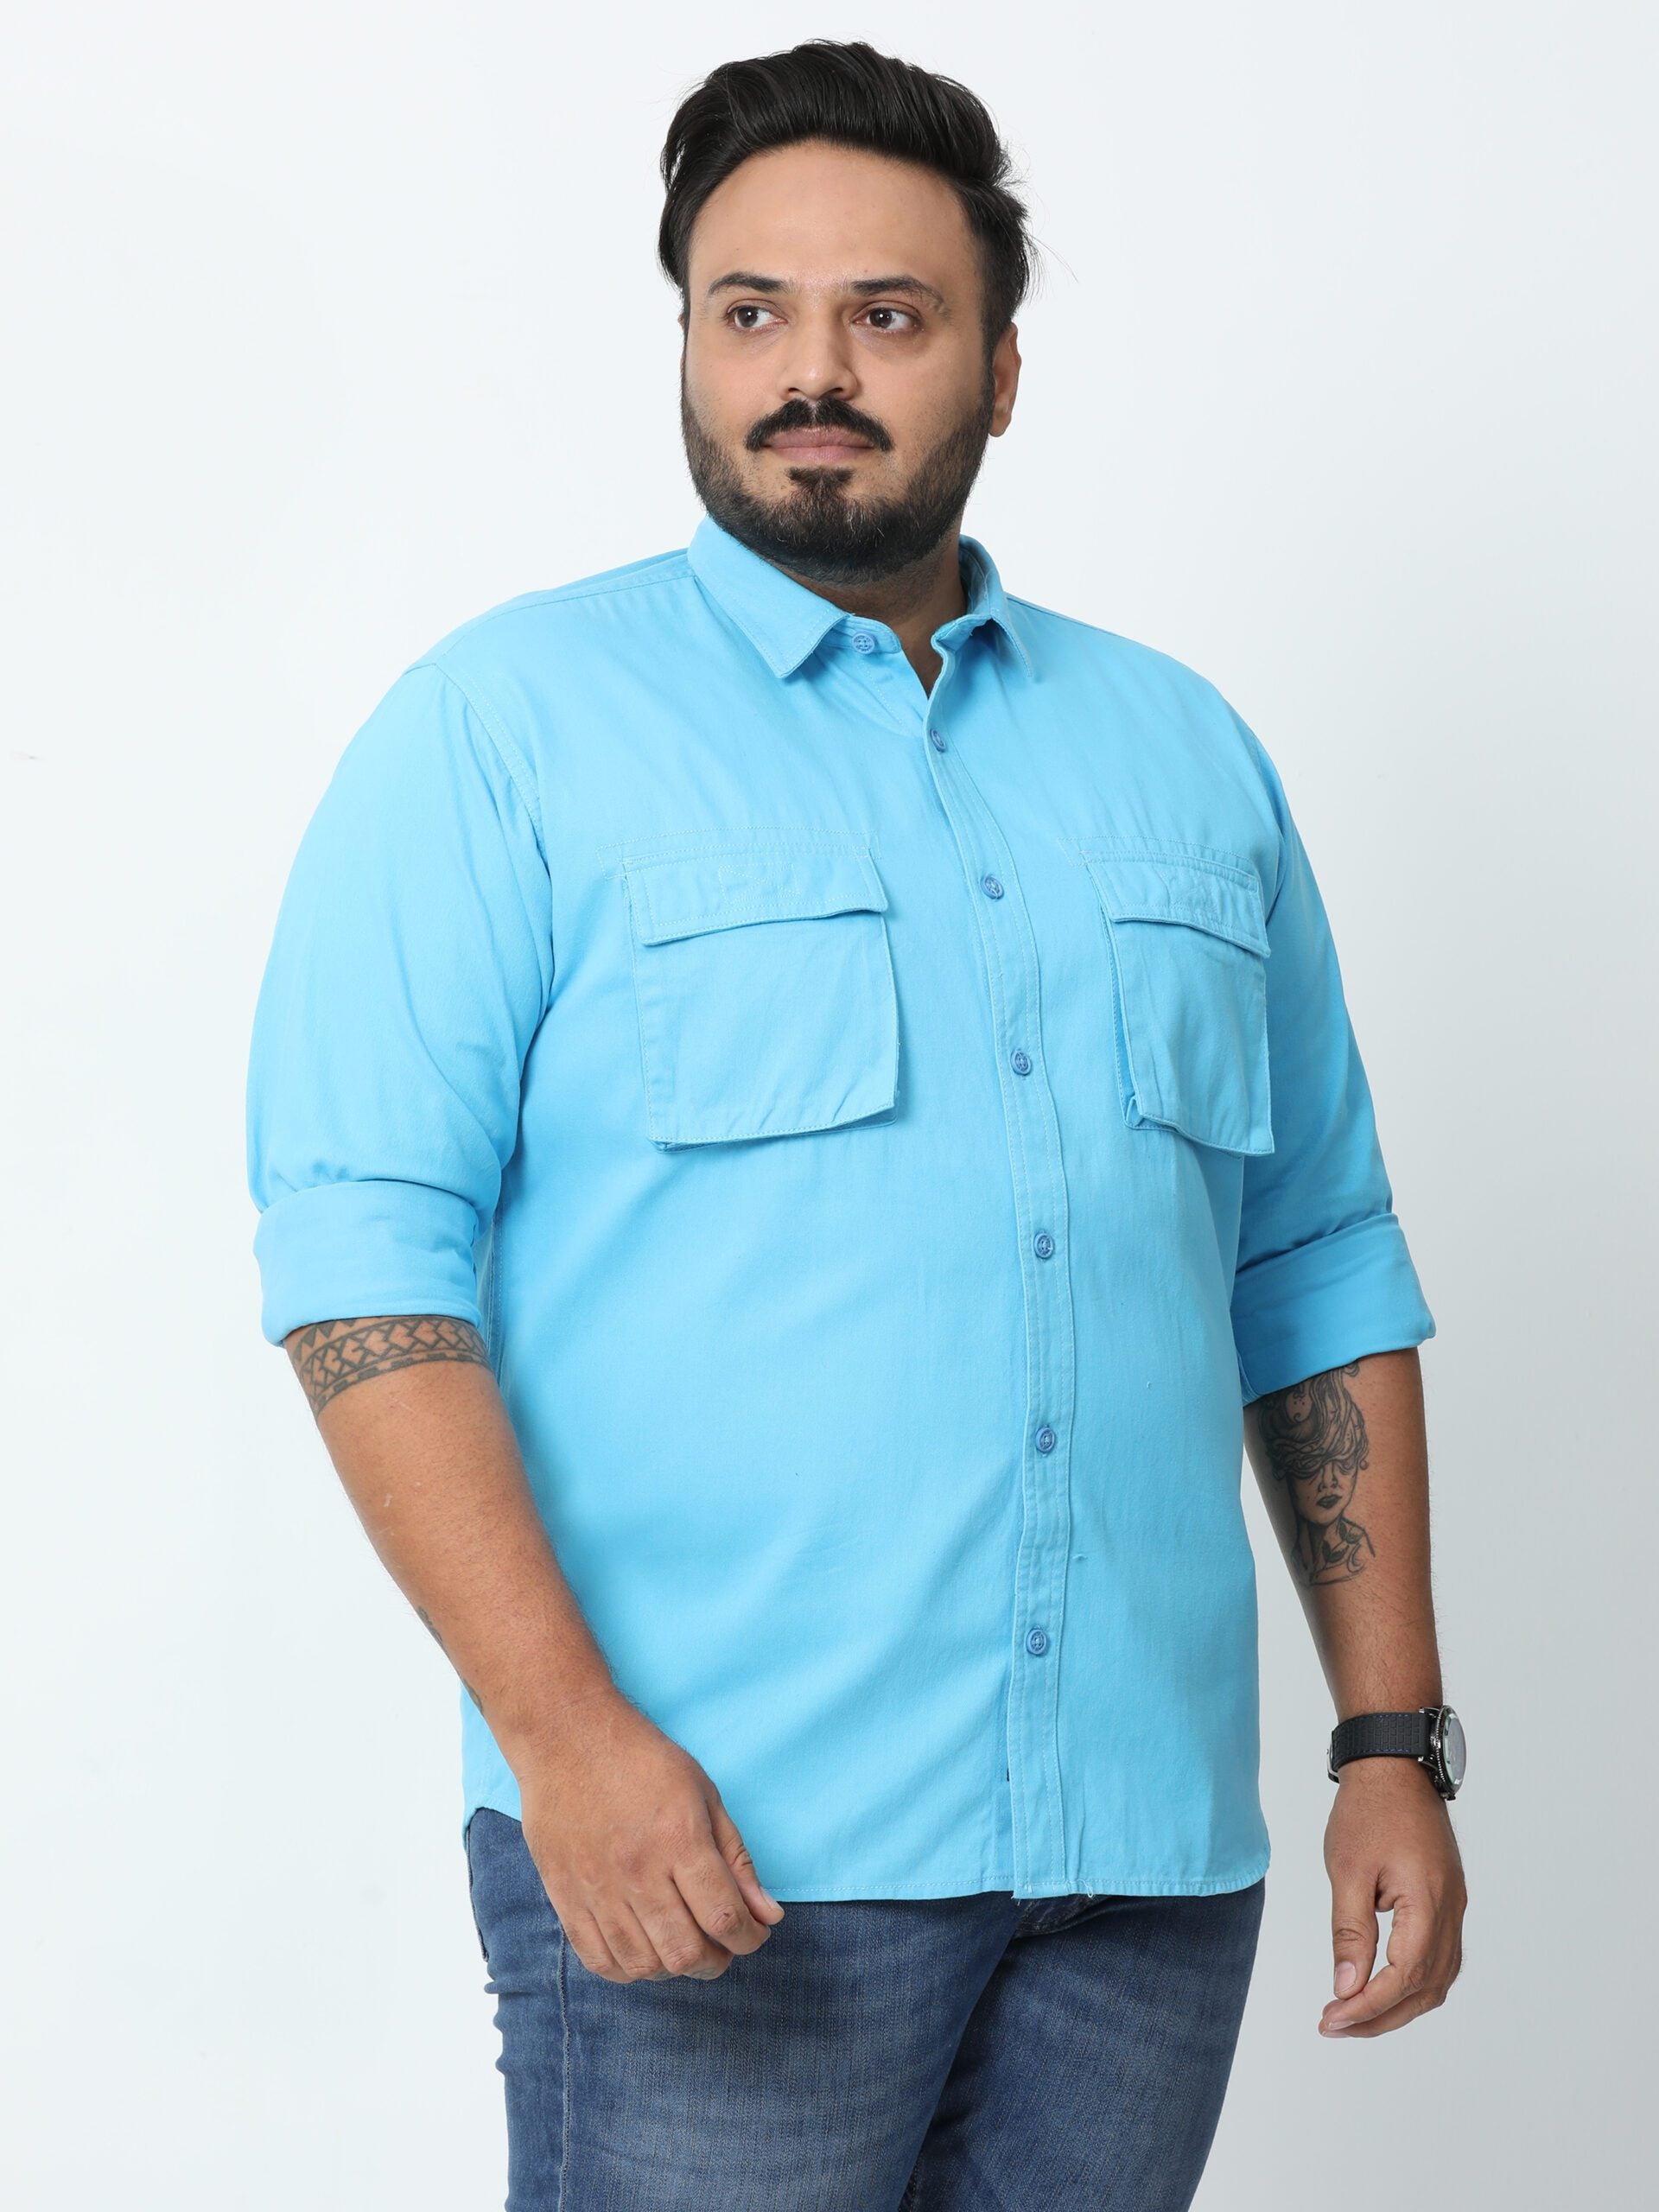 Zesi Murky Blue Shirt - Stylish Printed Cotton Casual Wear for Men